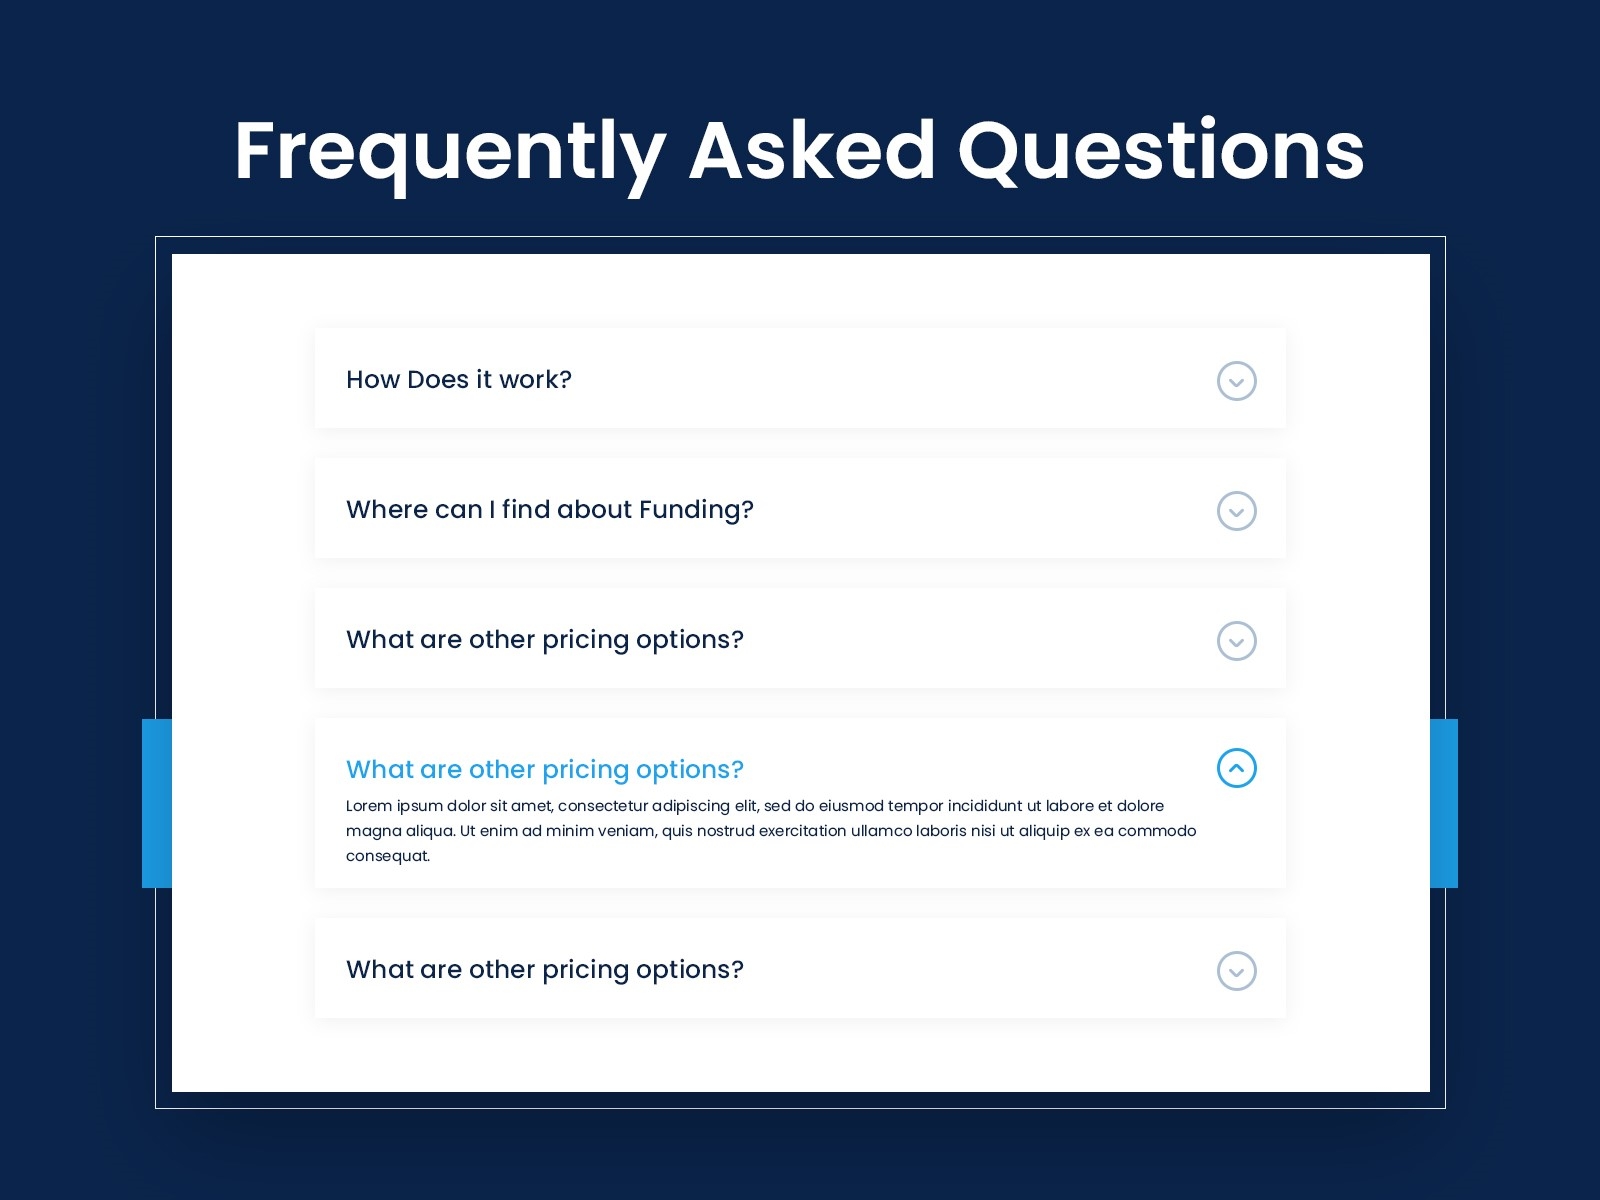 Faq detail. Страница FAQ дизайн. FAQ веб дизайн. FAQ дизайн сайта. FAQ Интерфейс.